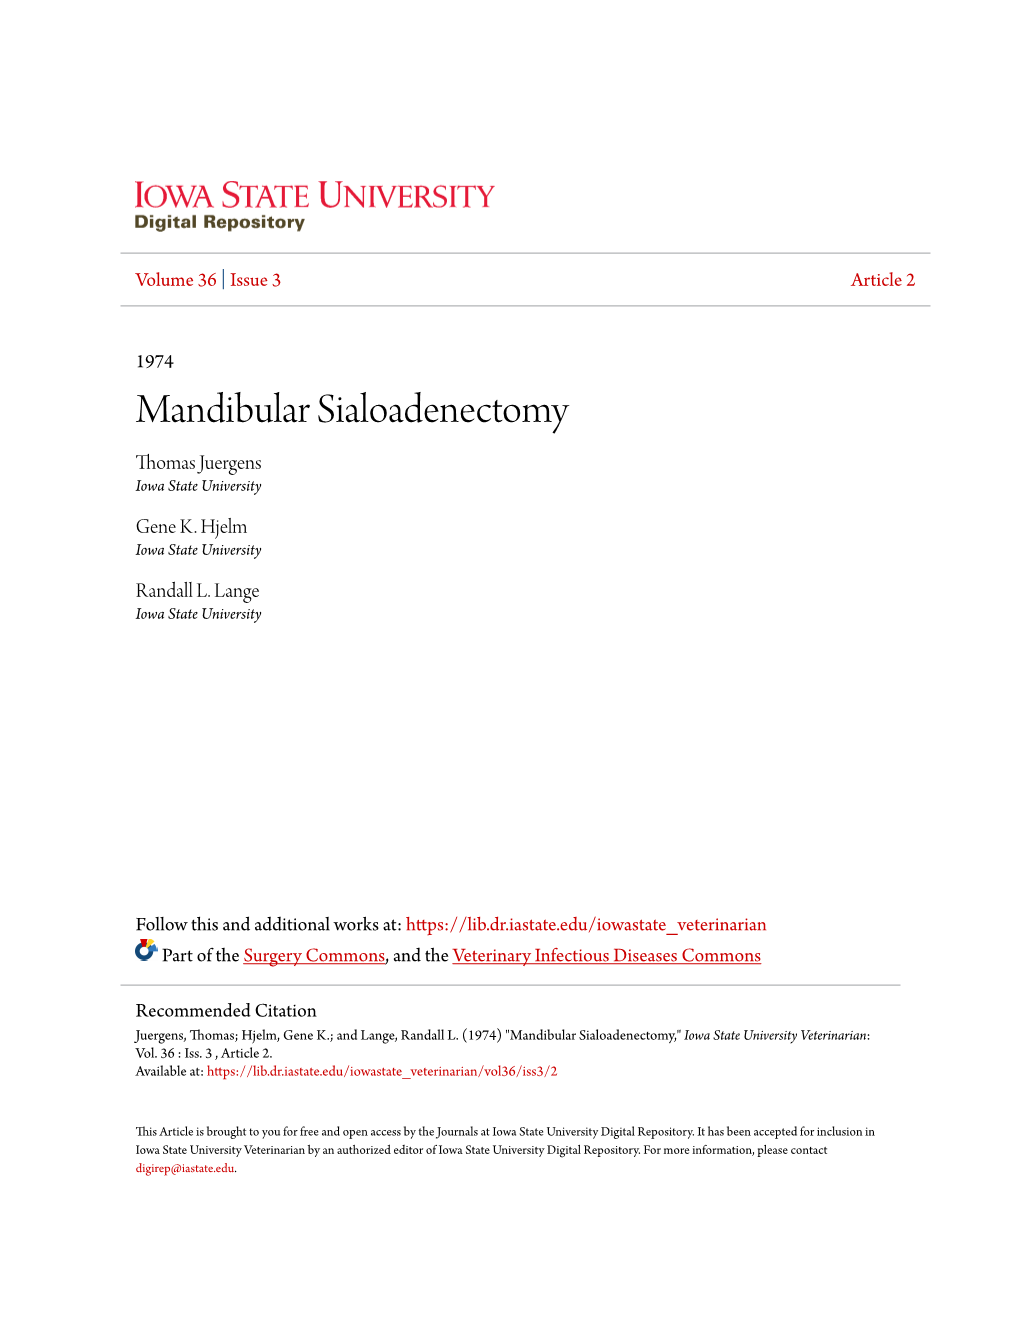 Mandibular Sialoadenectomy Thomas Juergens Iowa State University